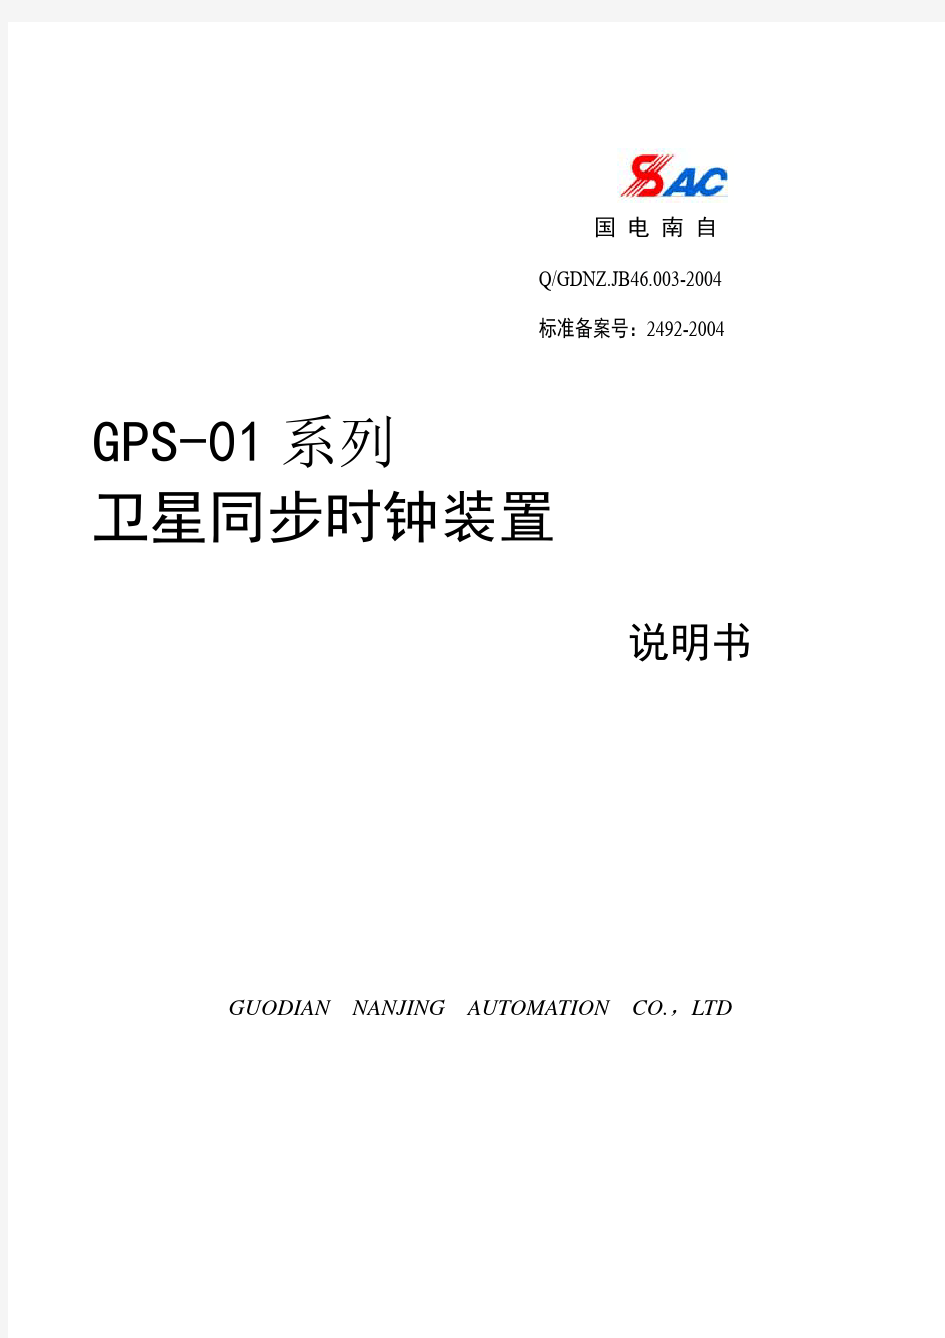 GPS-01系列说明书V1.1